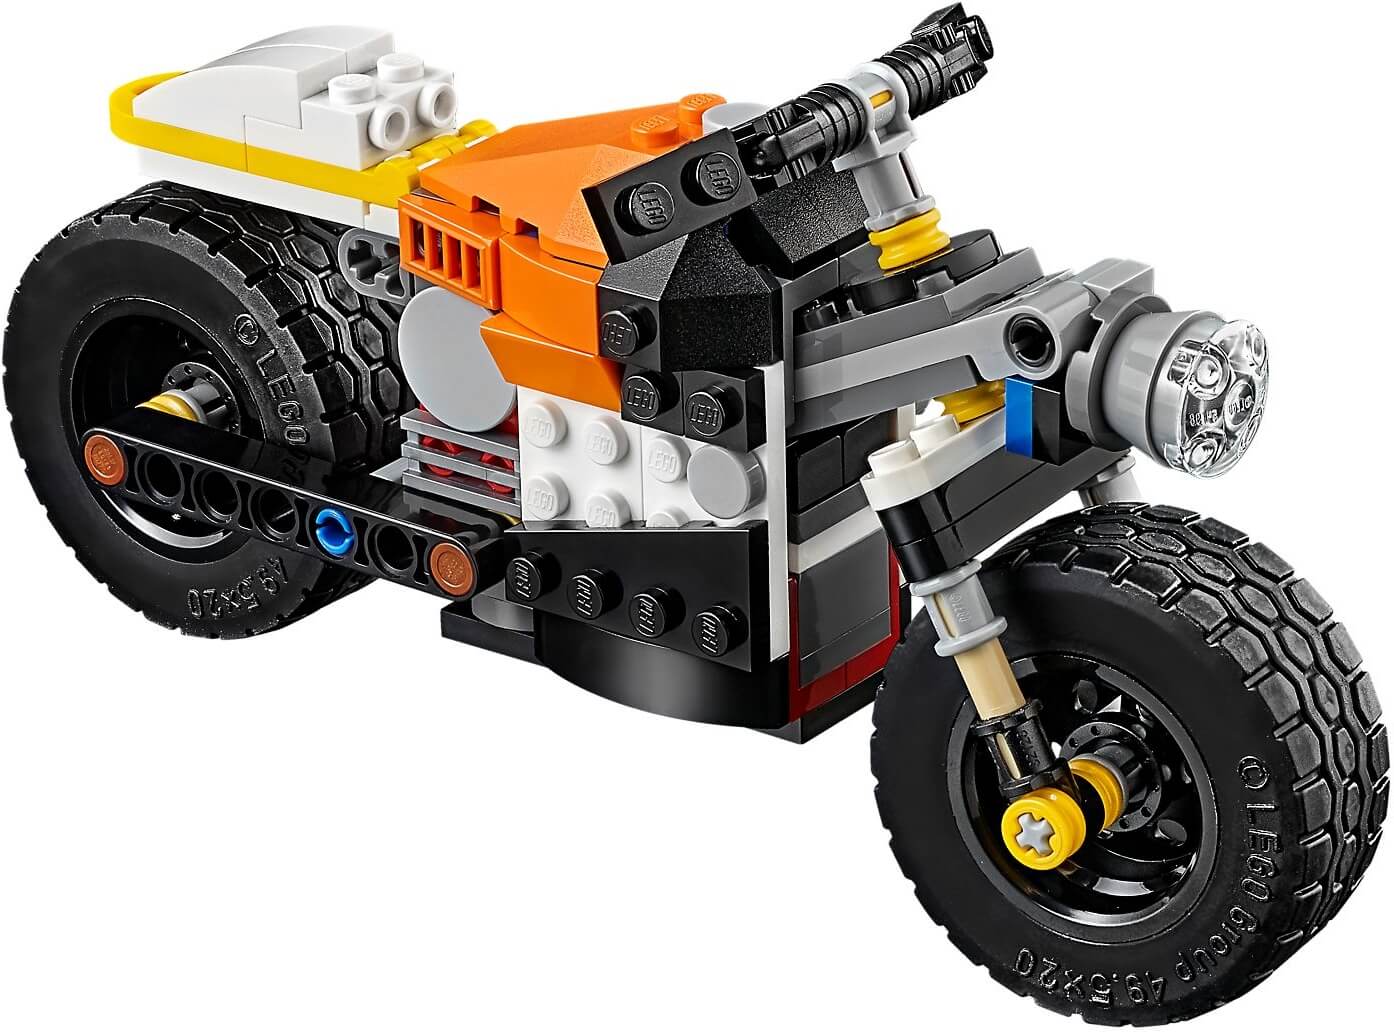 Gran moto callejera ( Lego 31059 ) imagen c